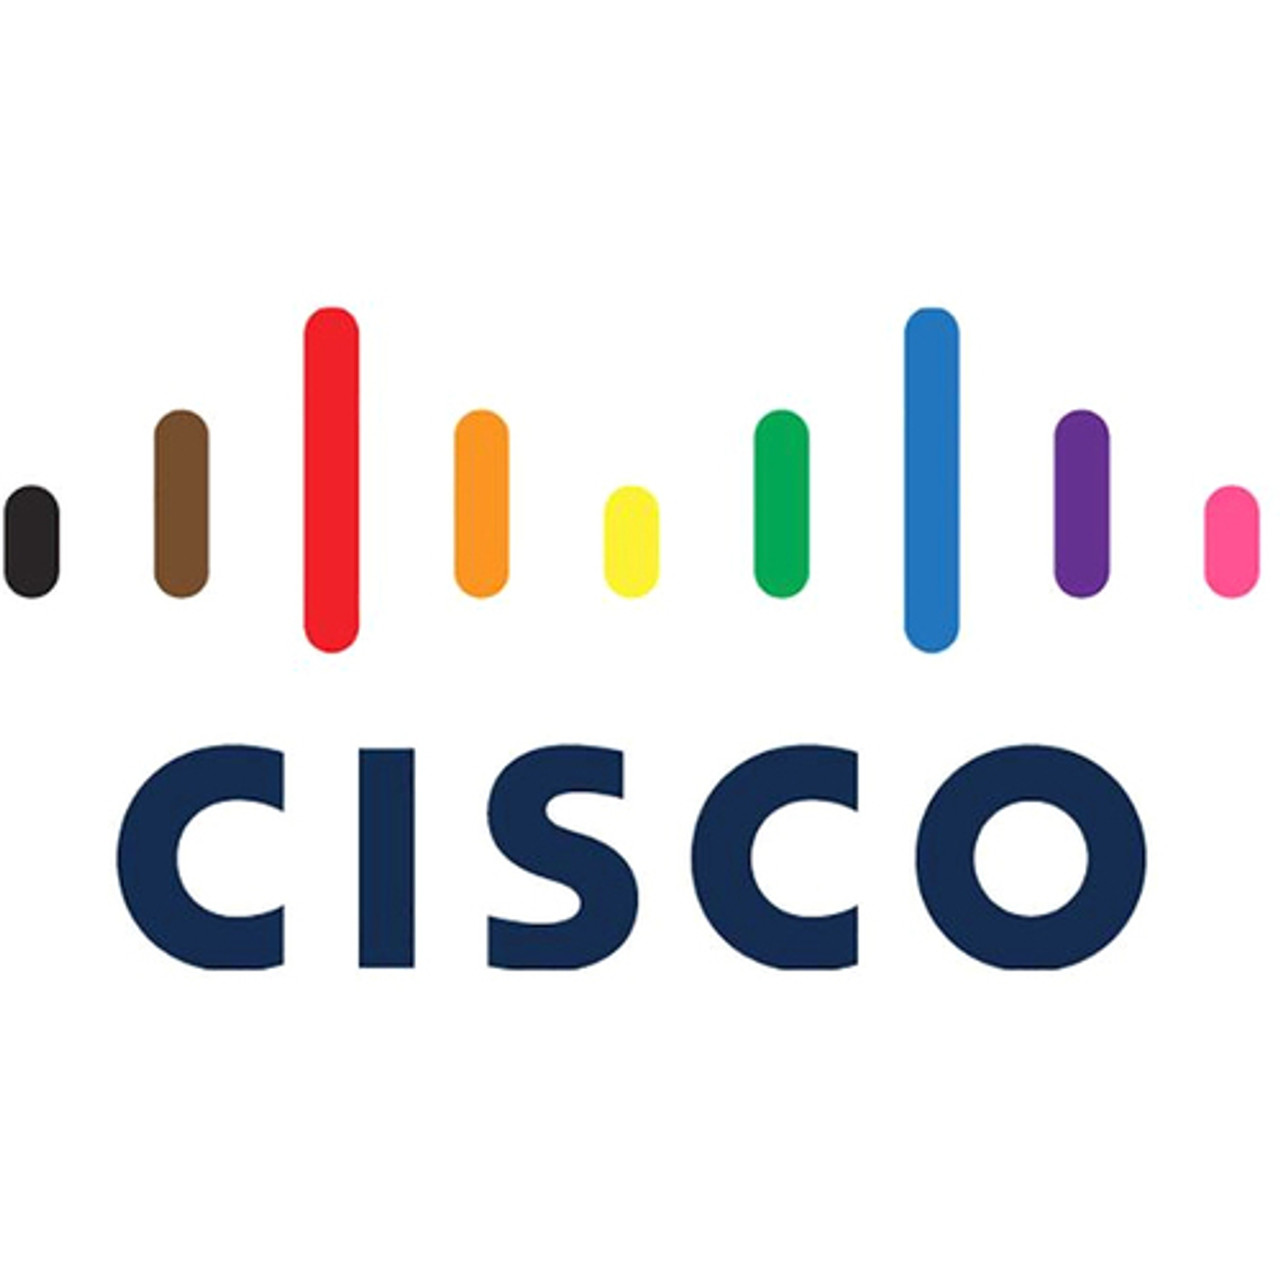 Cisco 16 TB Hard Drive - 3.5" Internal - SAS (12Gb/s SAS)